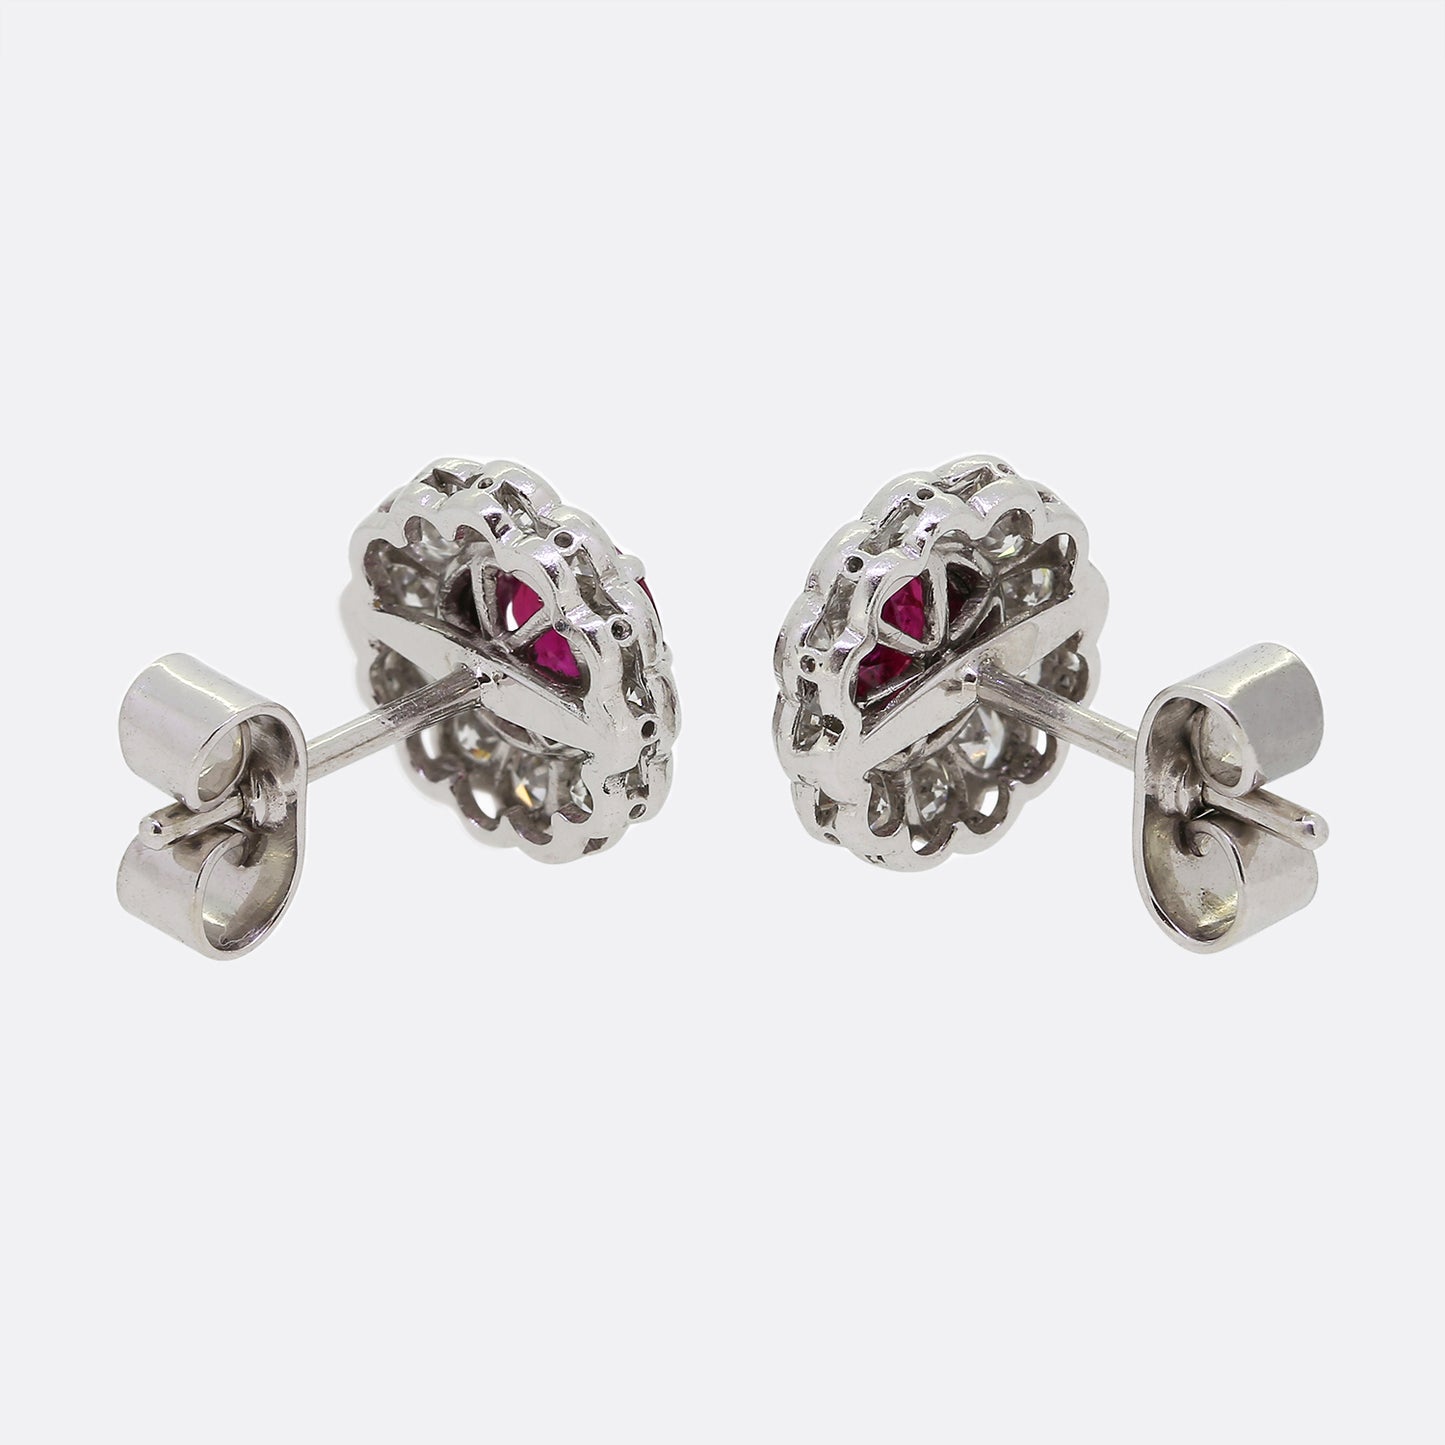 Ruby and Diamond Cluster Stud Earrings